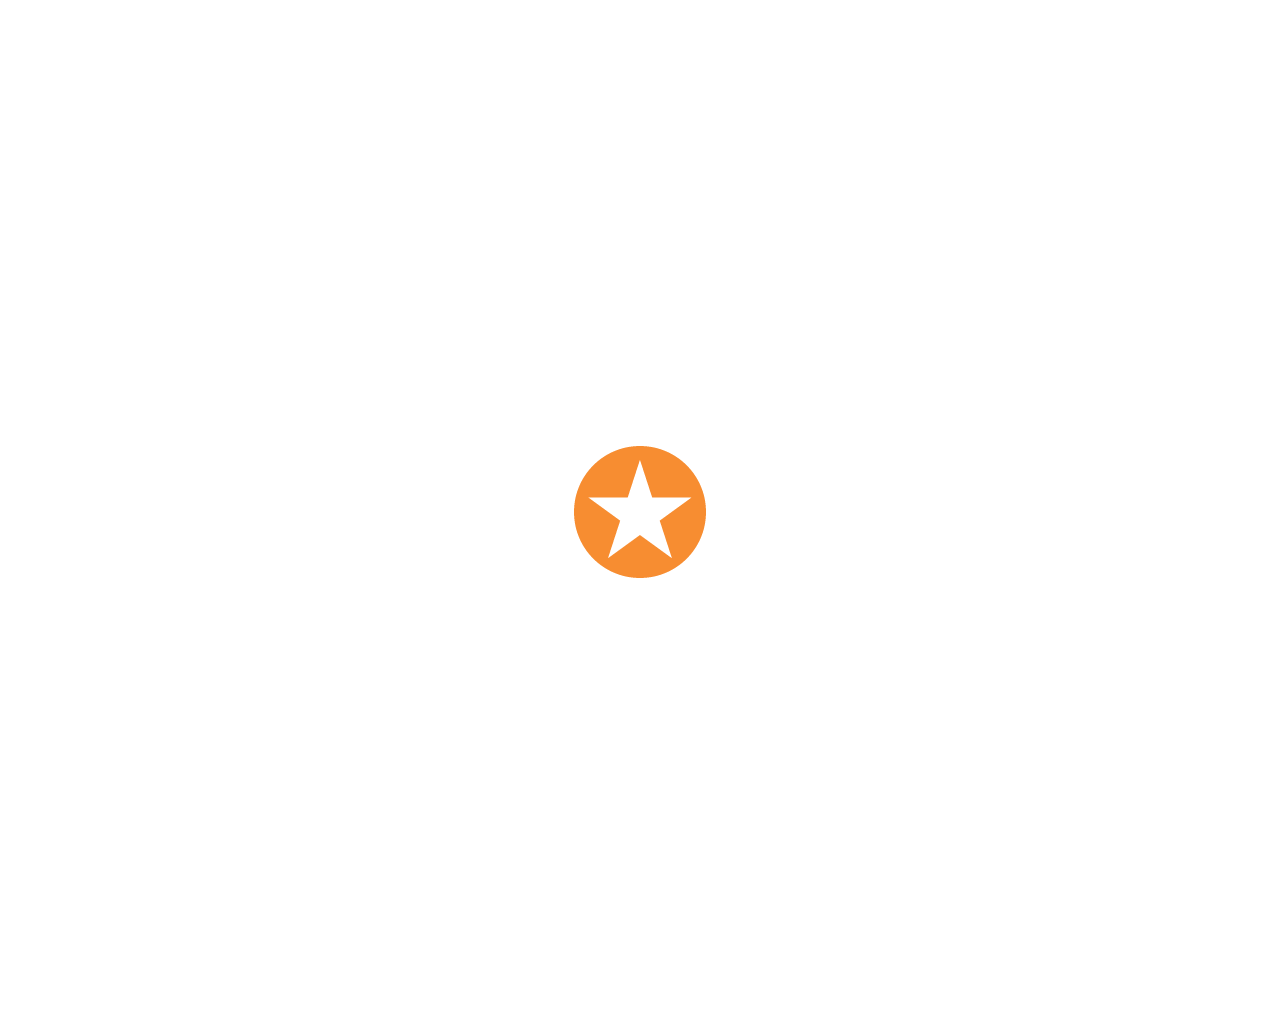 Star icon for peak reward rate plan